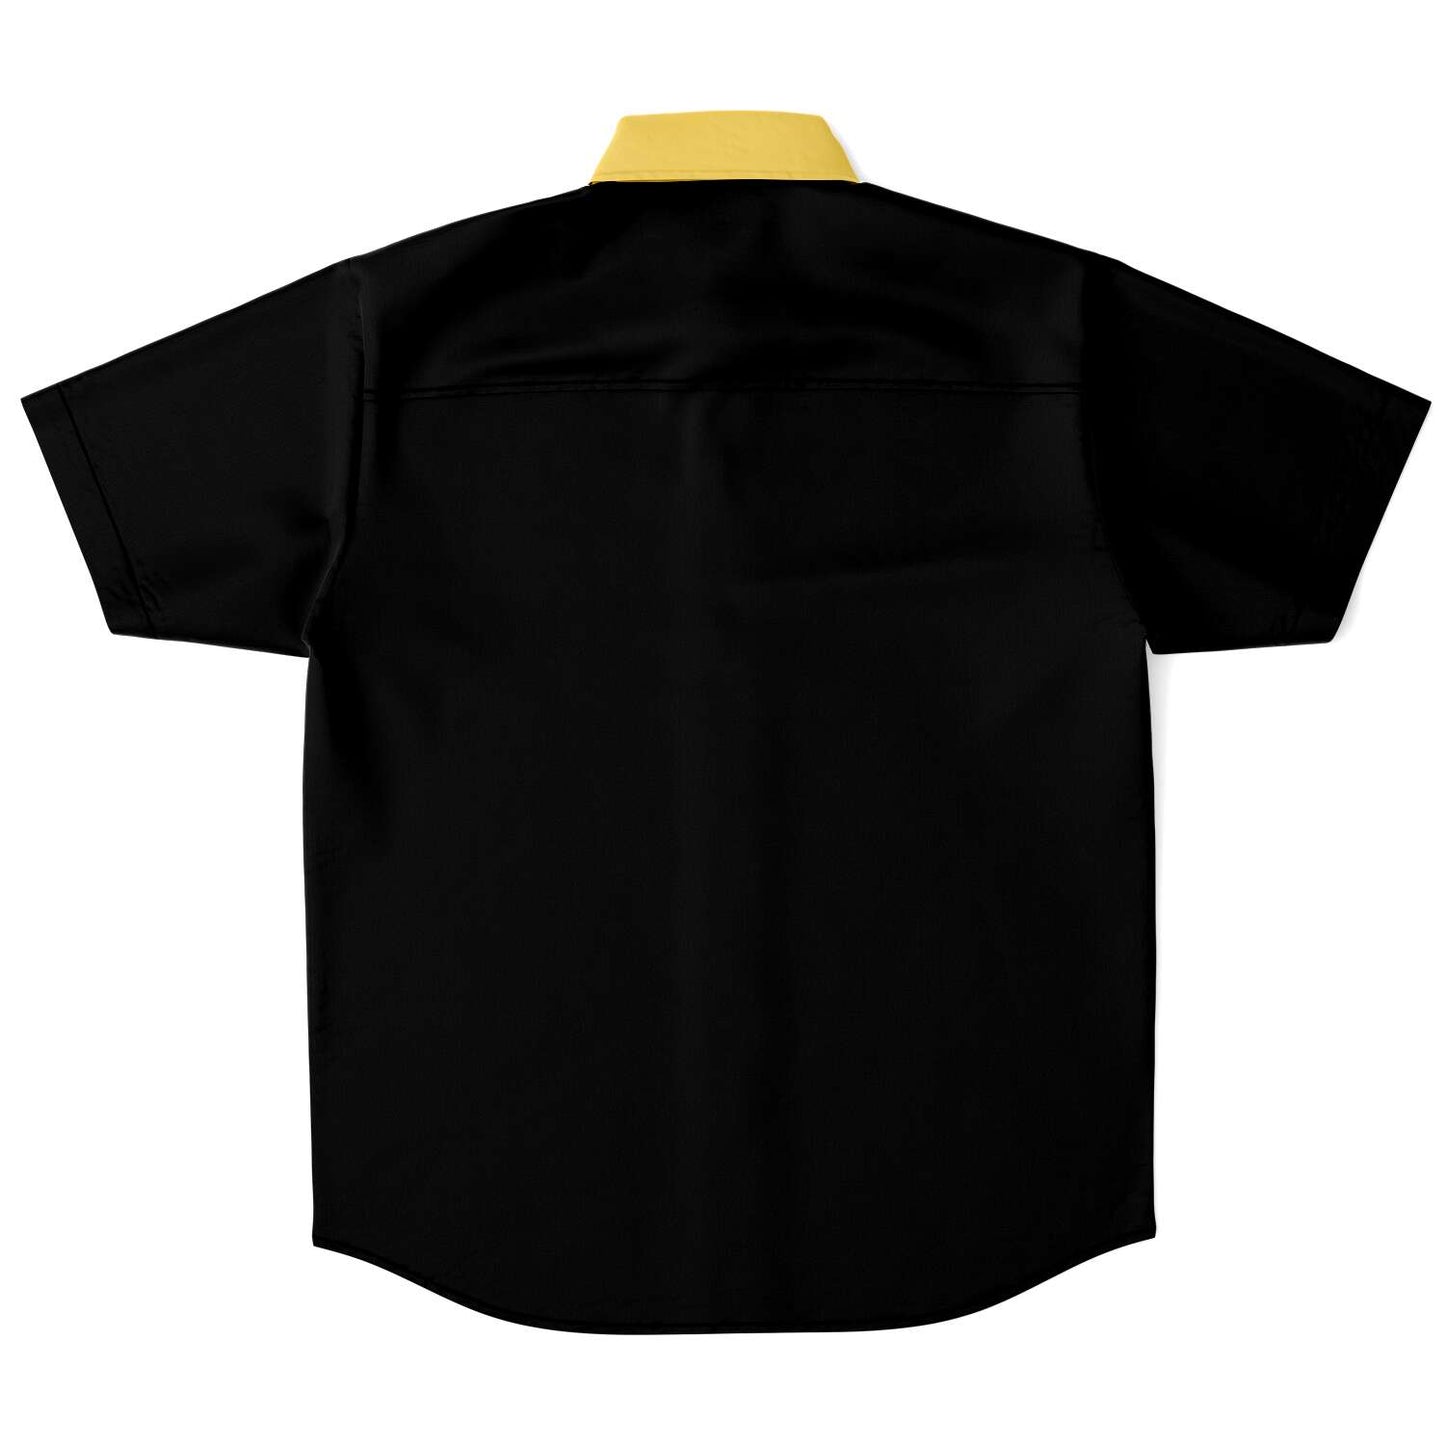 Button Down Shirt Black & Yellow PEACE GANG